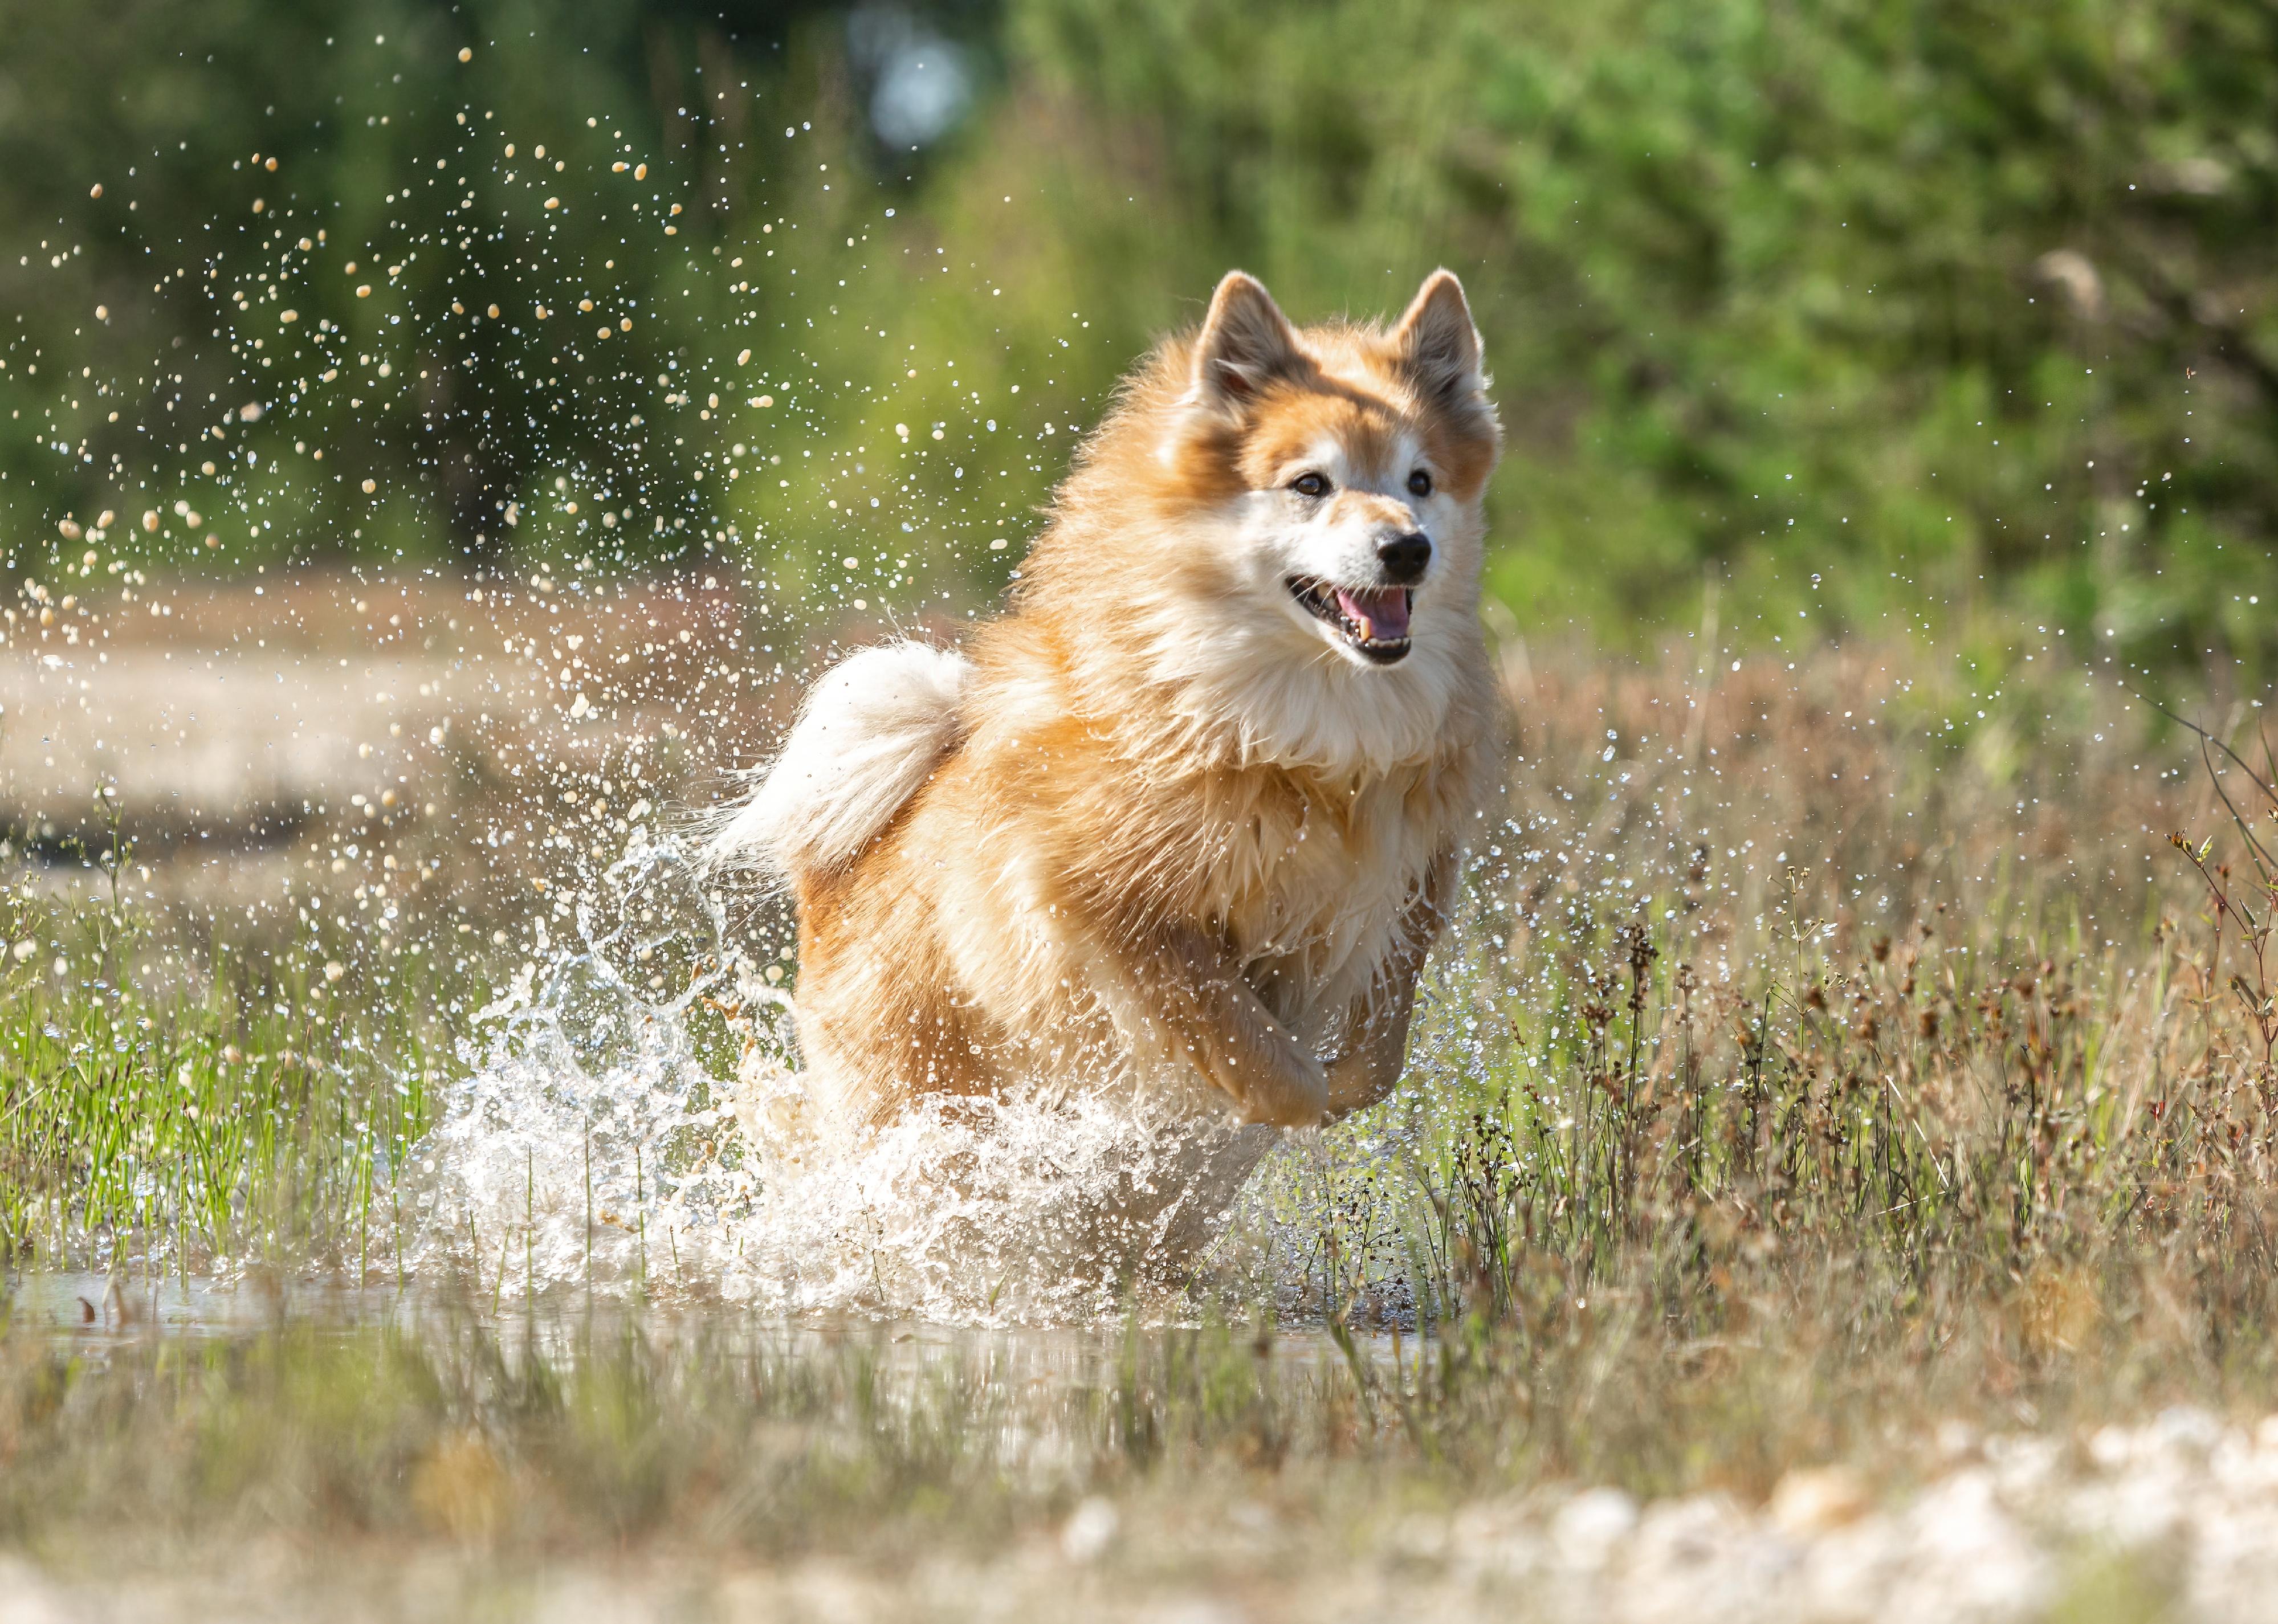 An icelandic sheepdog running through water in late summer outdoors.